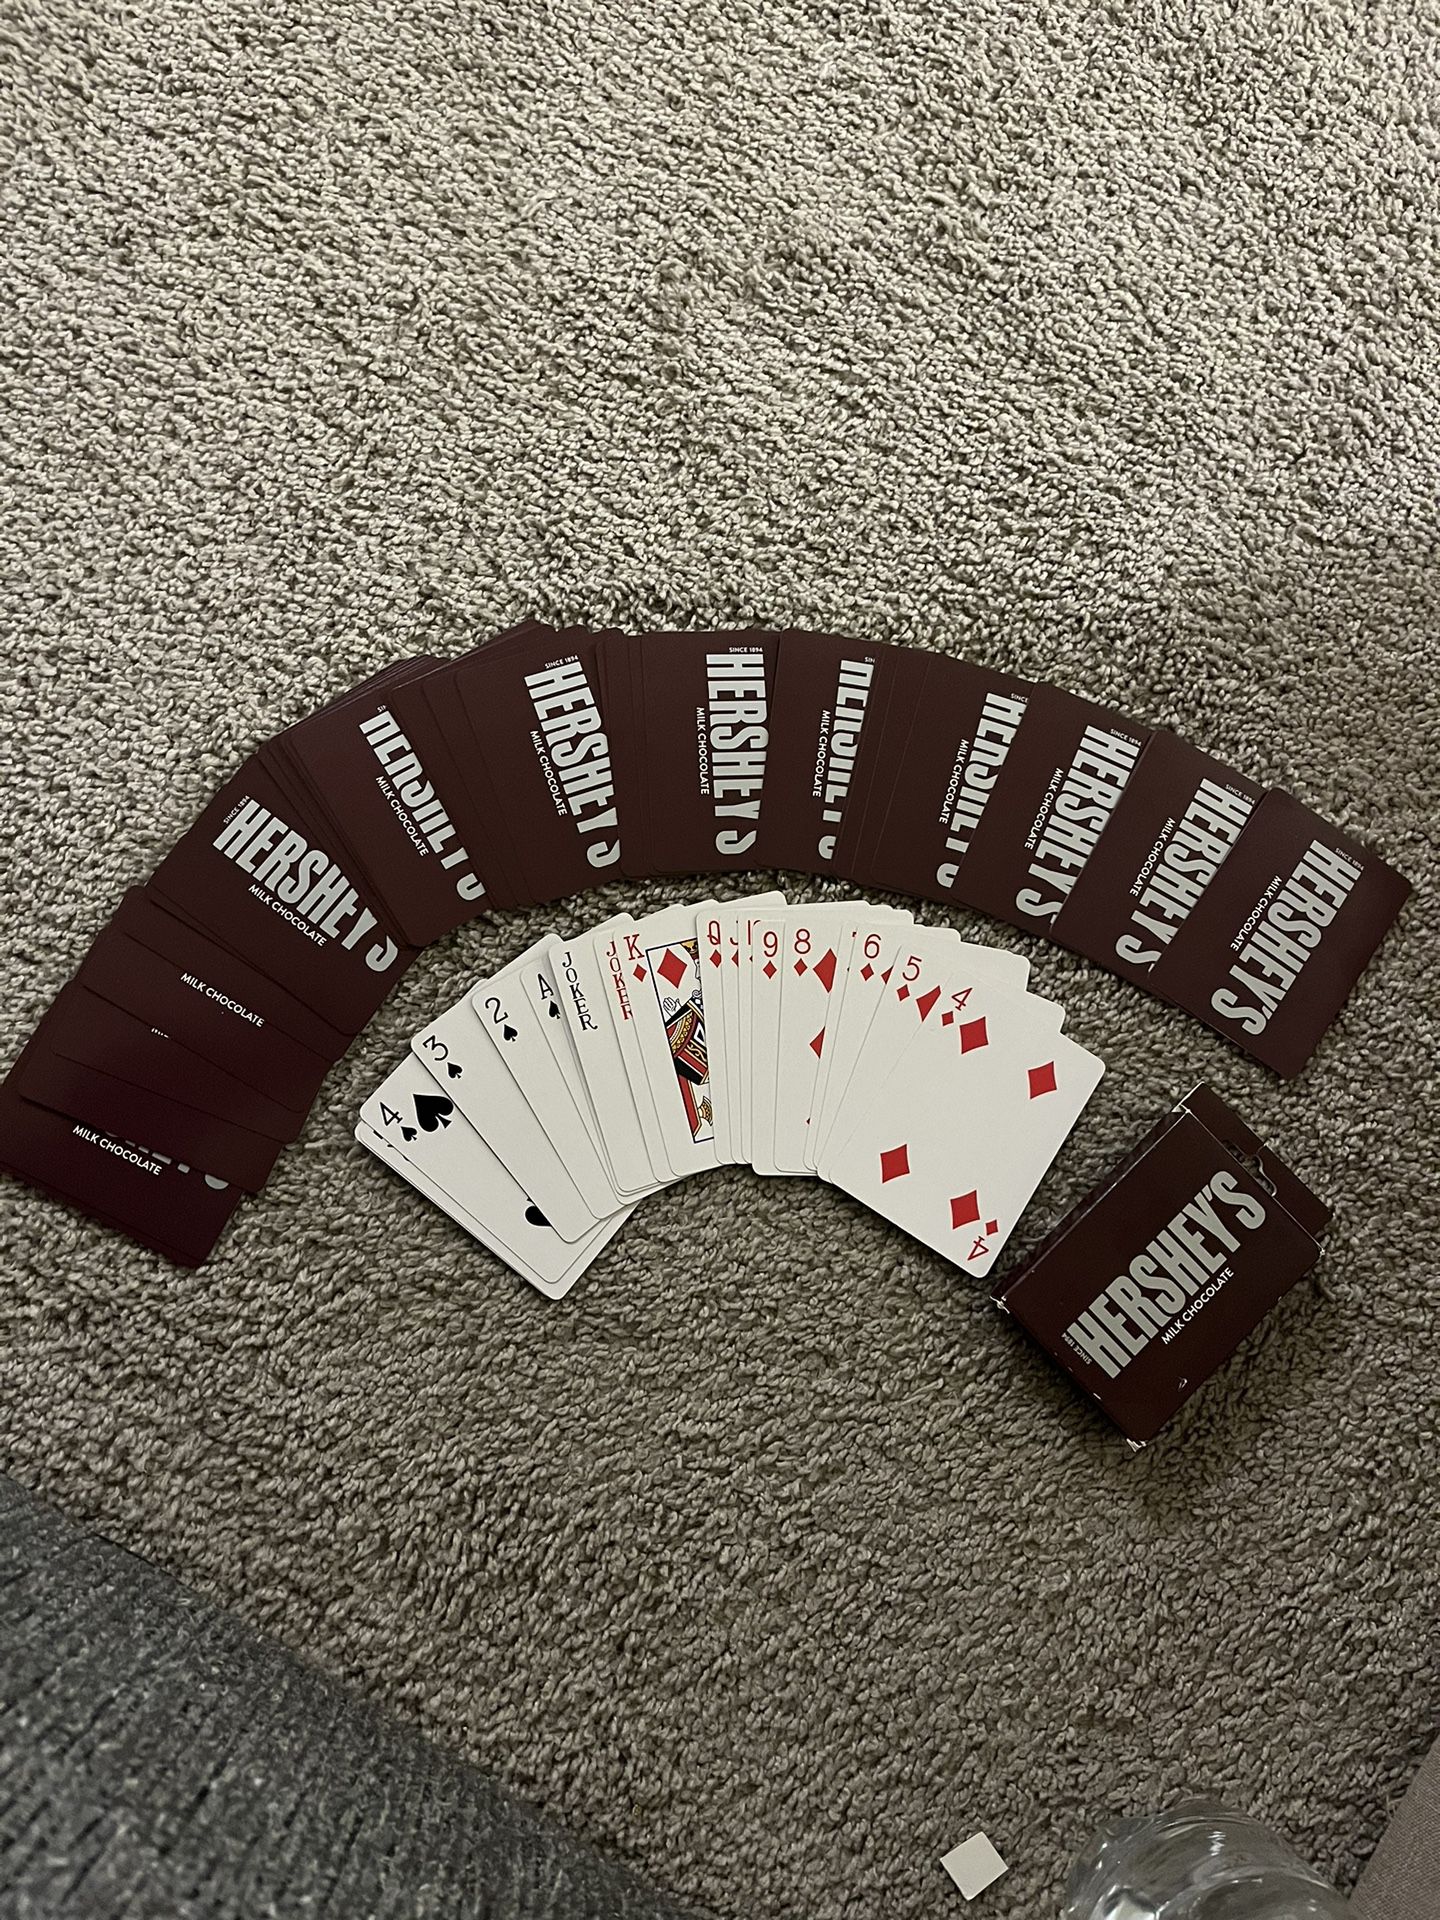 Hershey’s Chocolate Playing Cards